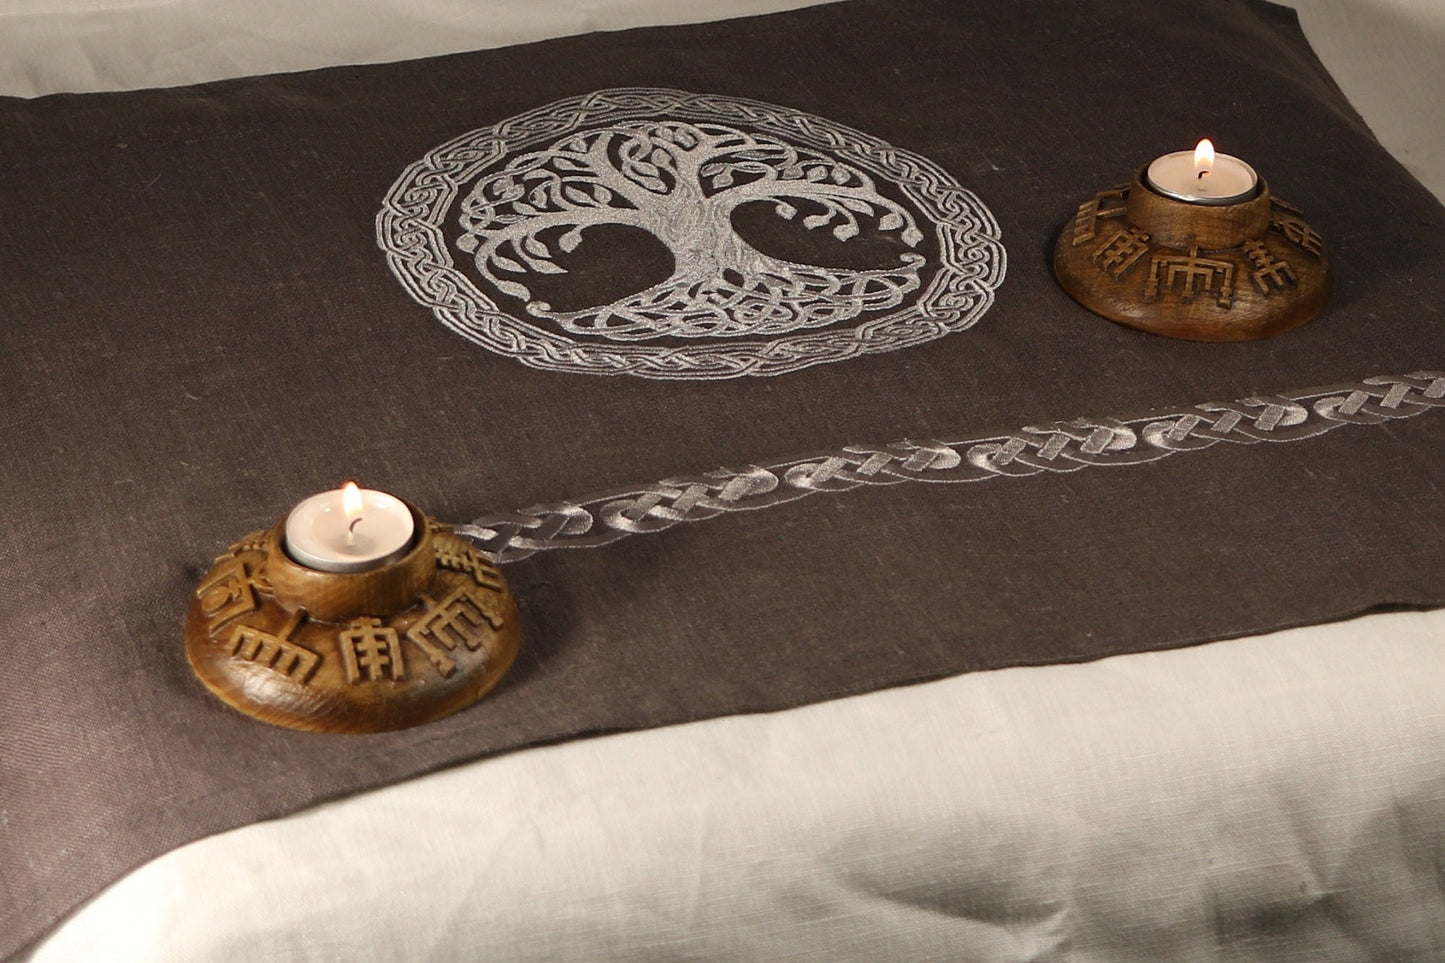 Yggdrasil Travel, Altar cloth,Embroidered napkins Celtic Tree of life